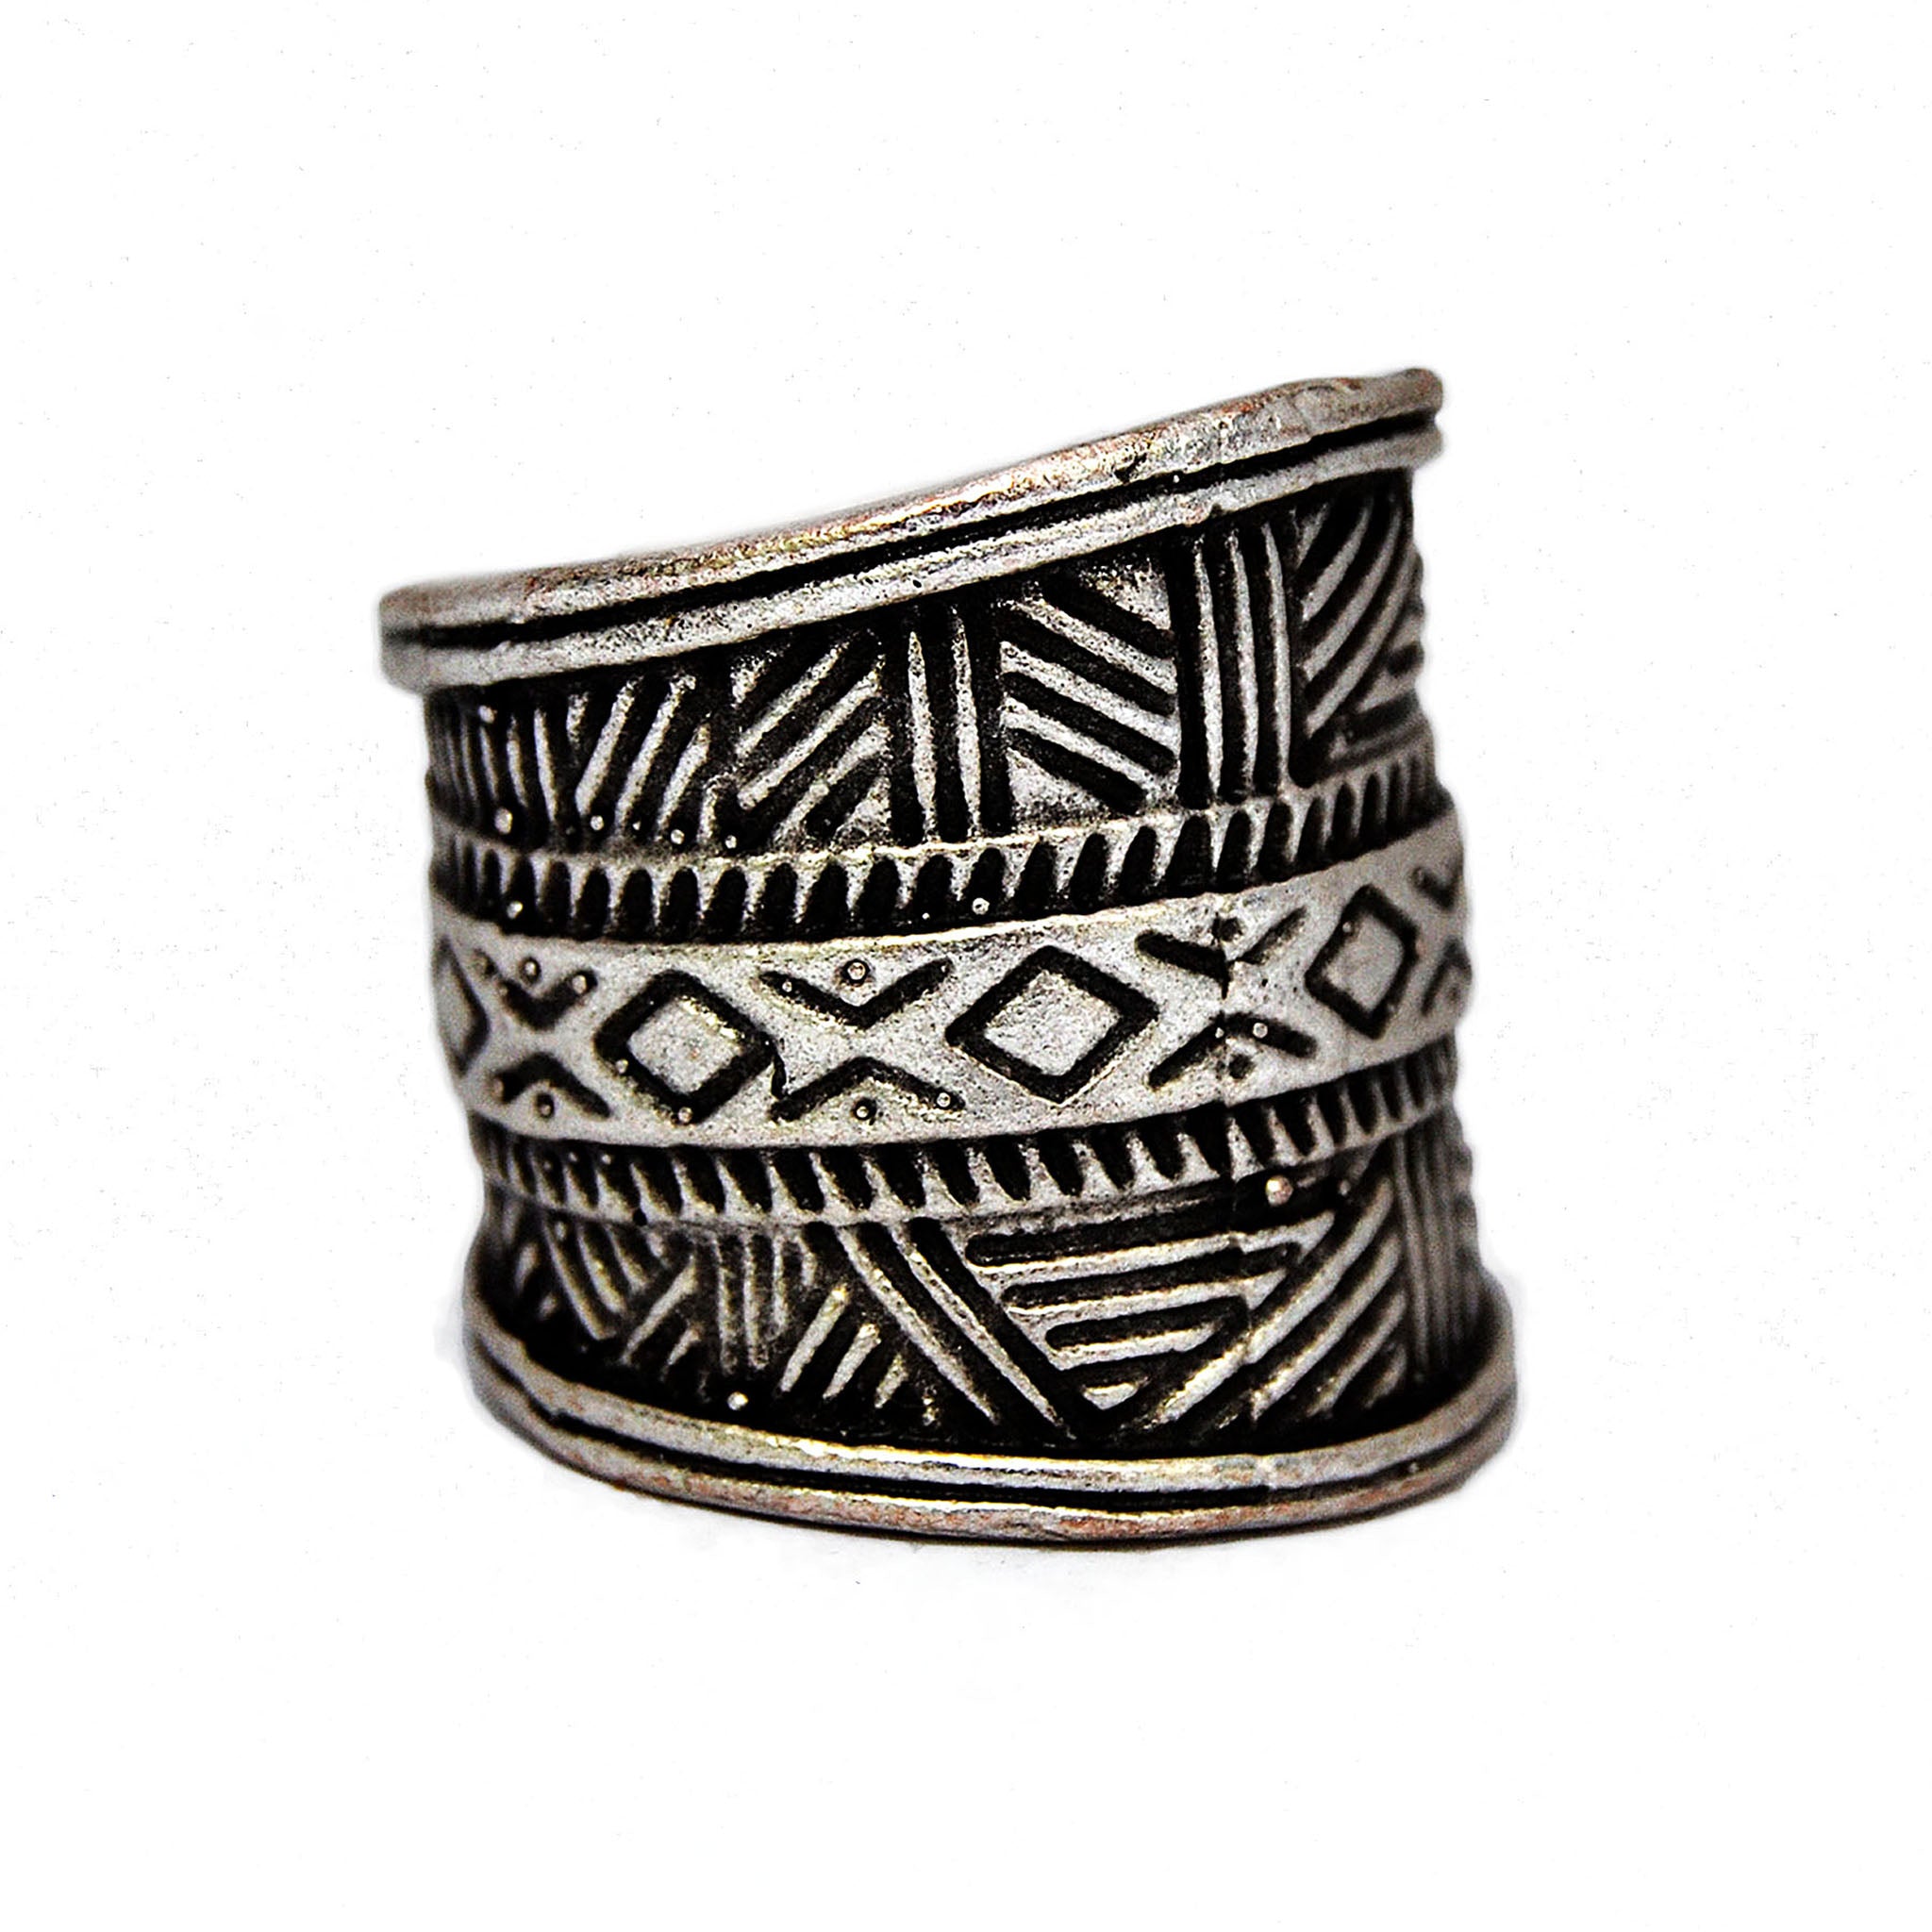 Silver tuareg ring